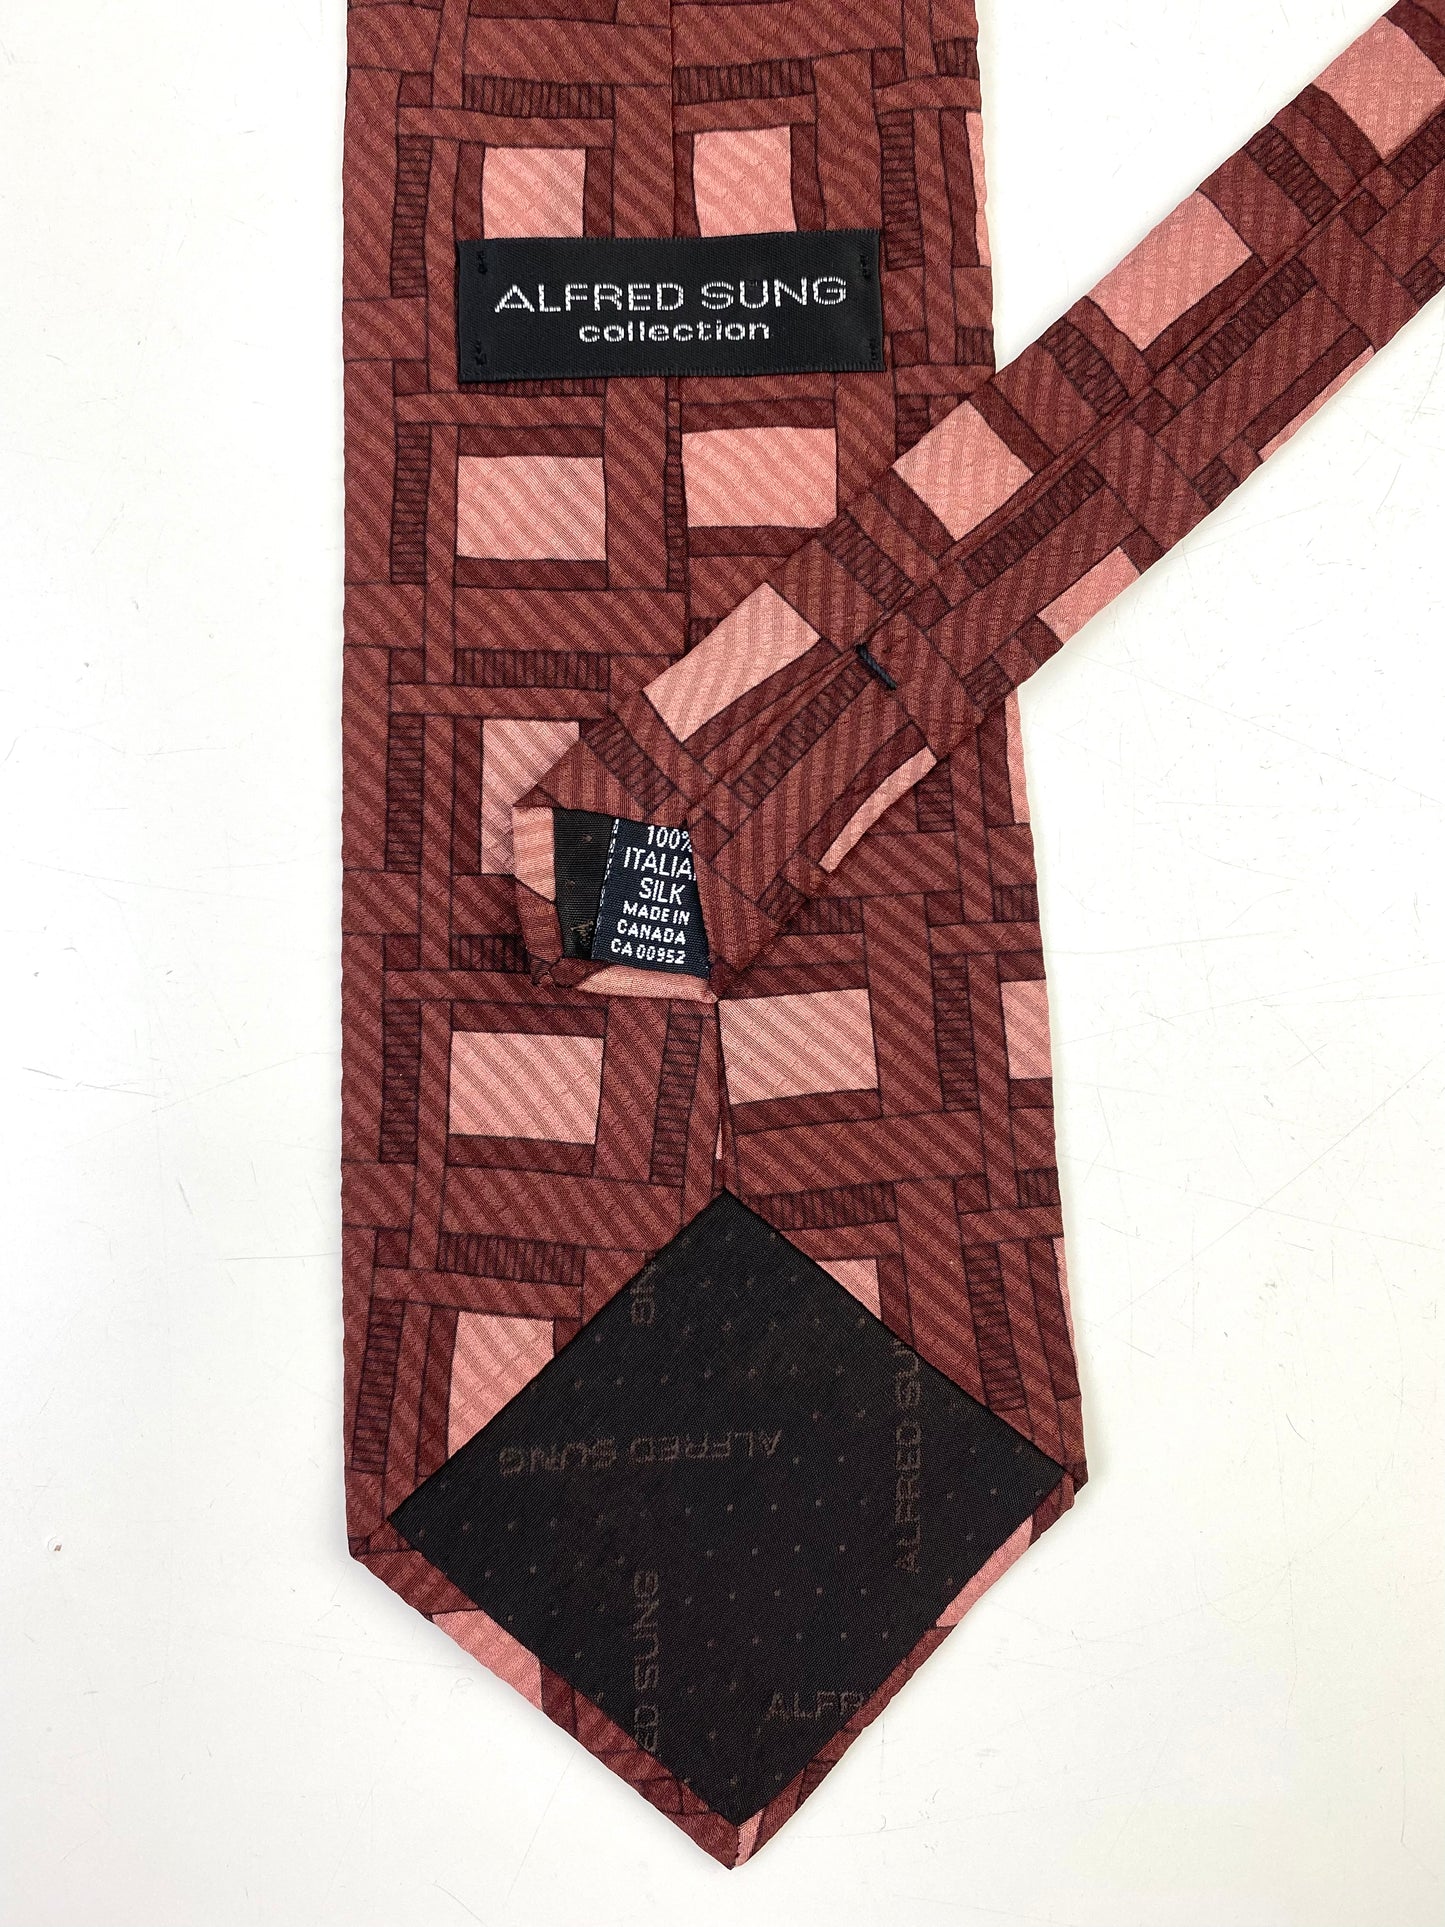 90s Deadstock Silk Necktie, Men's Vintage Brown/ Pink Lattice Pattern Tie, NOS